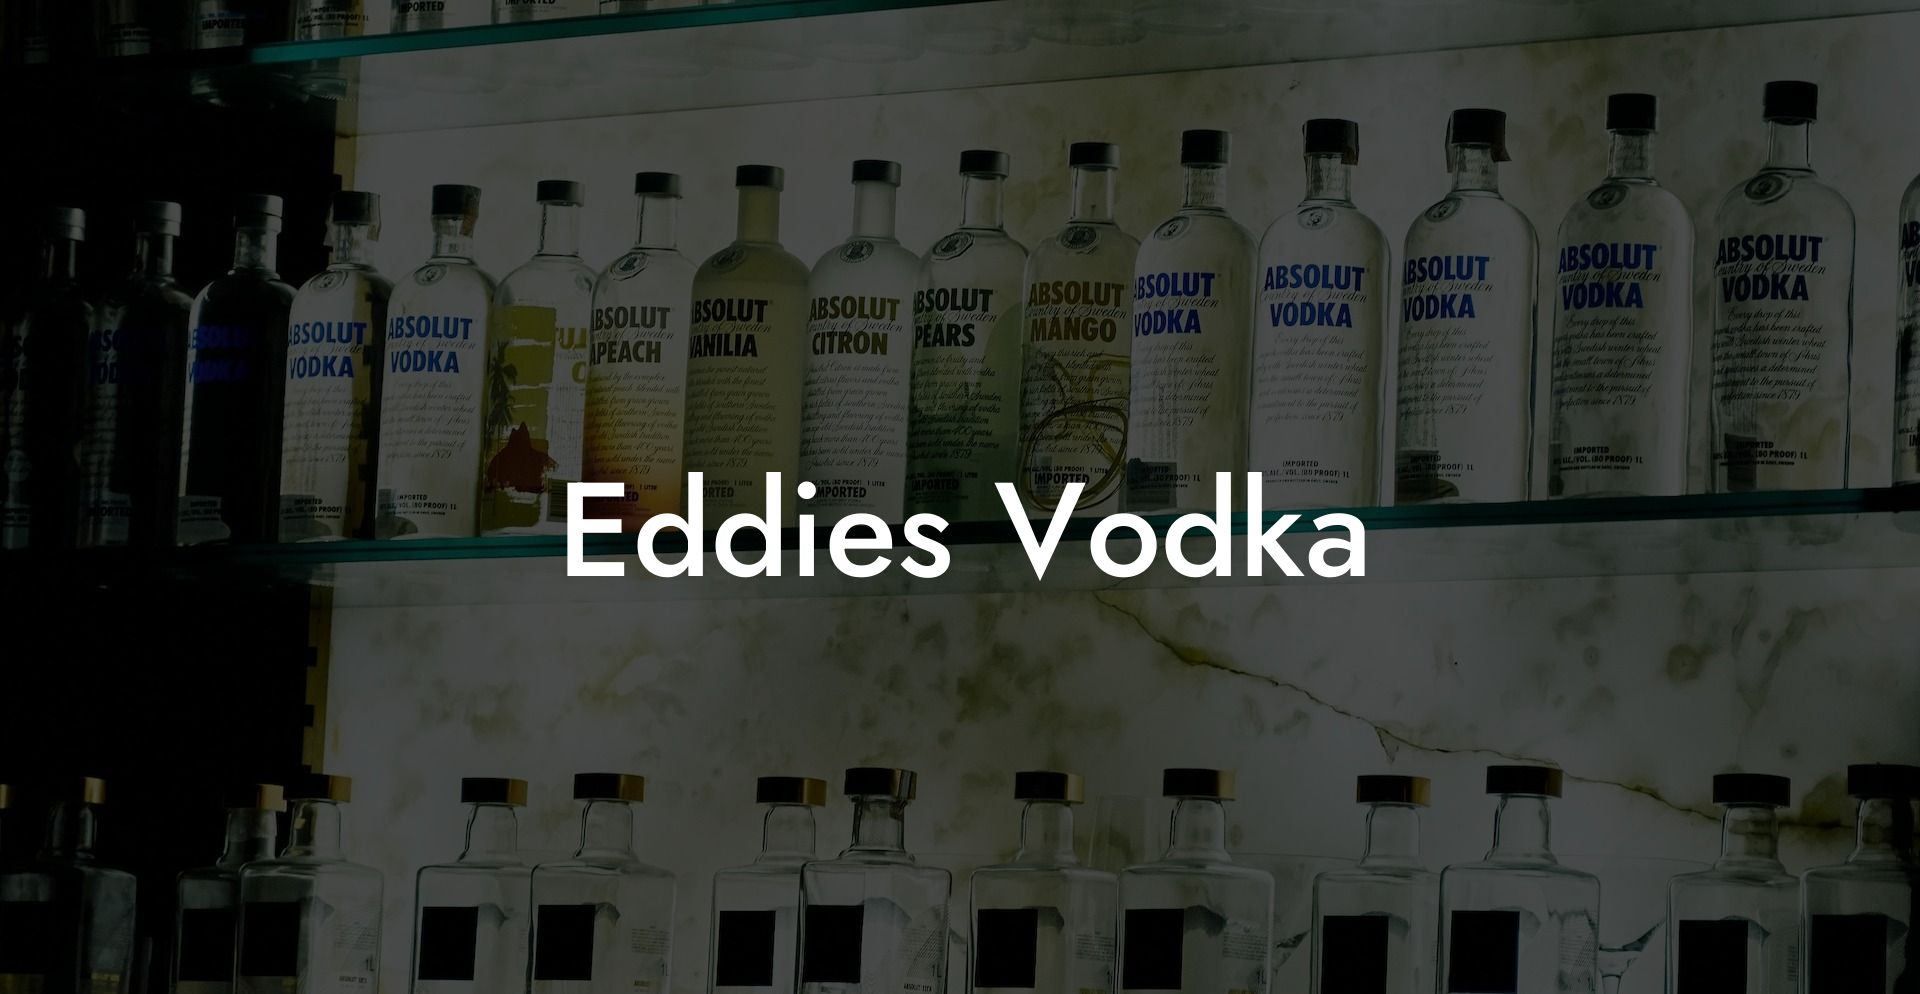 Eddies Vodka